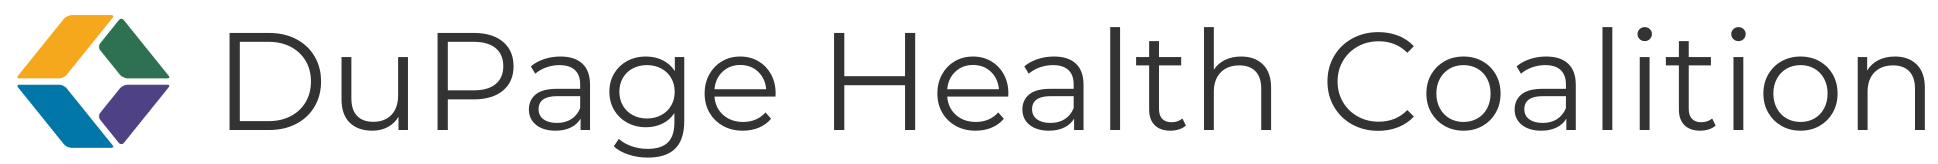 DuPage Health Coalition Logo Horizontal